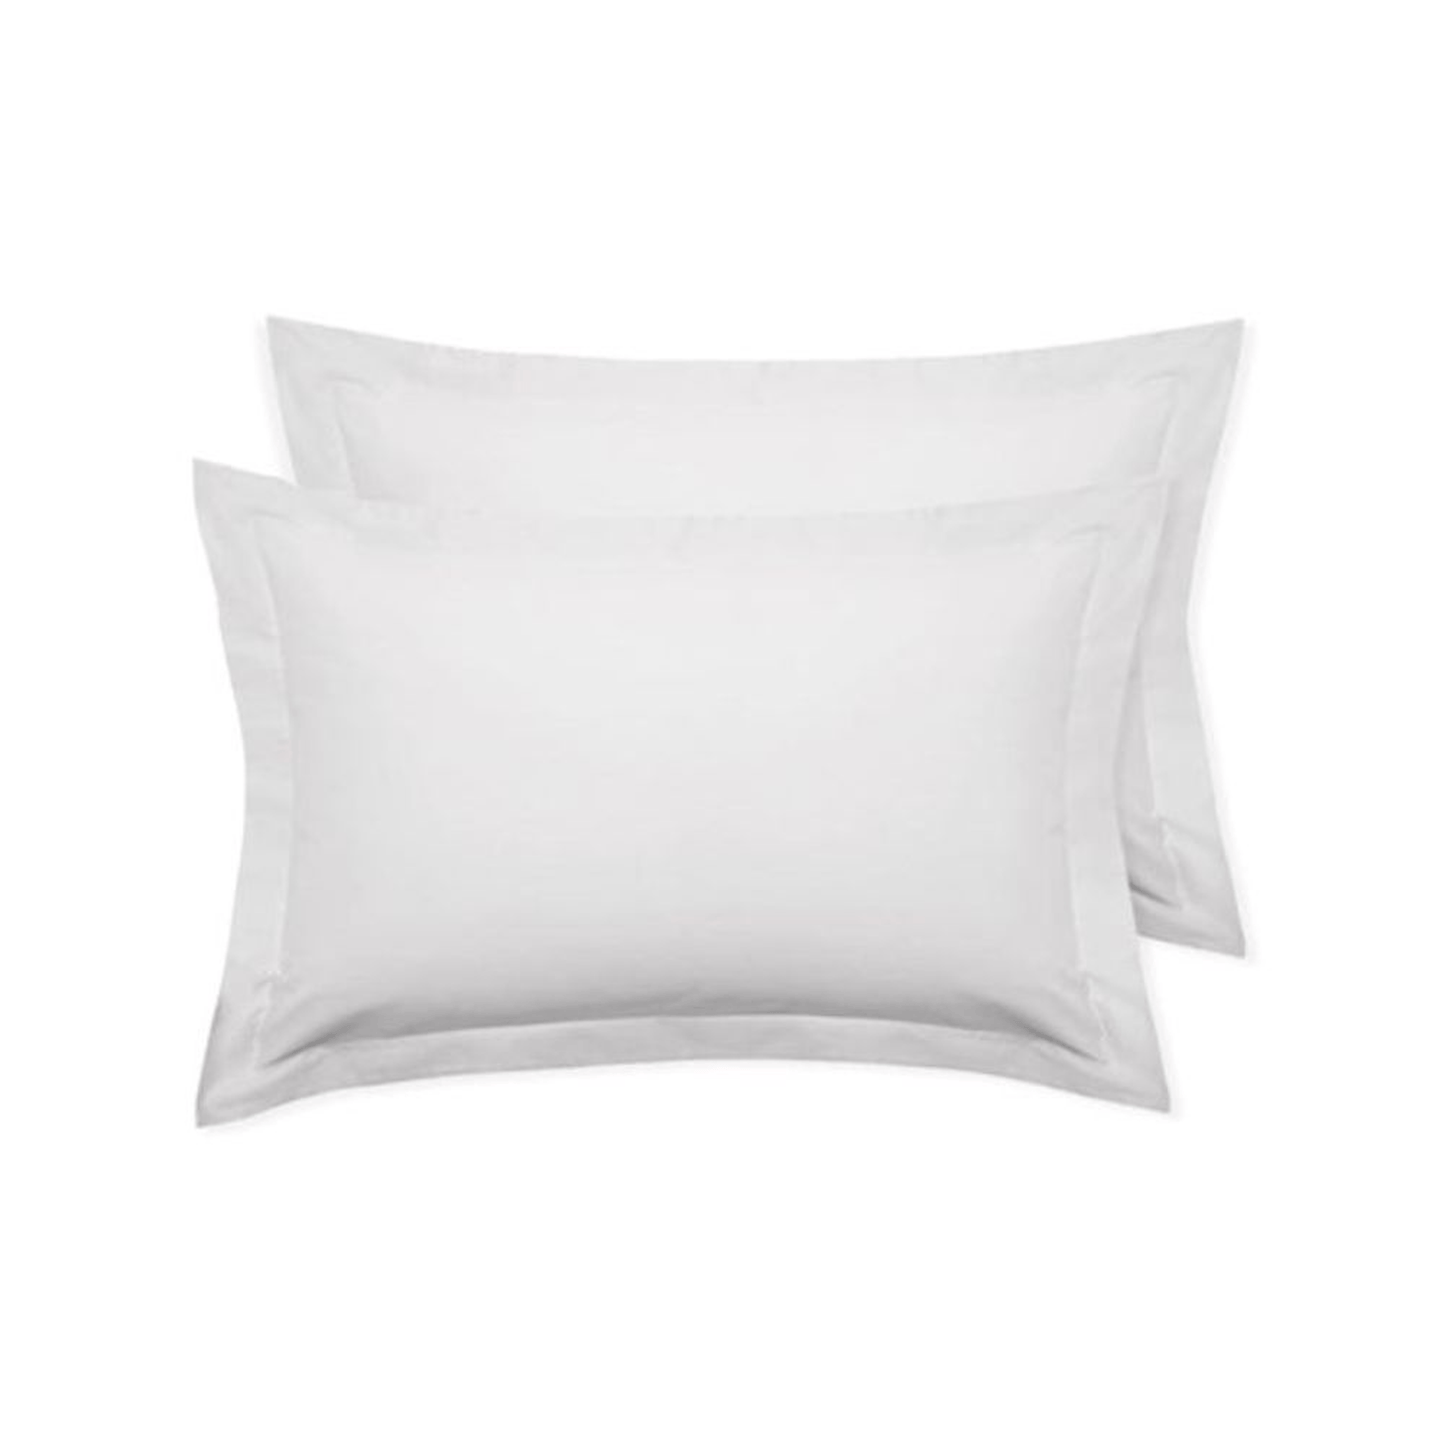 100% Cotton Percale Pillowcase Sets - Set of 2